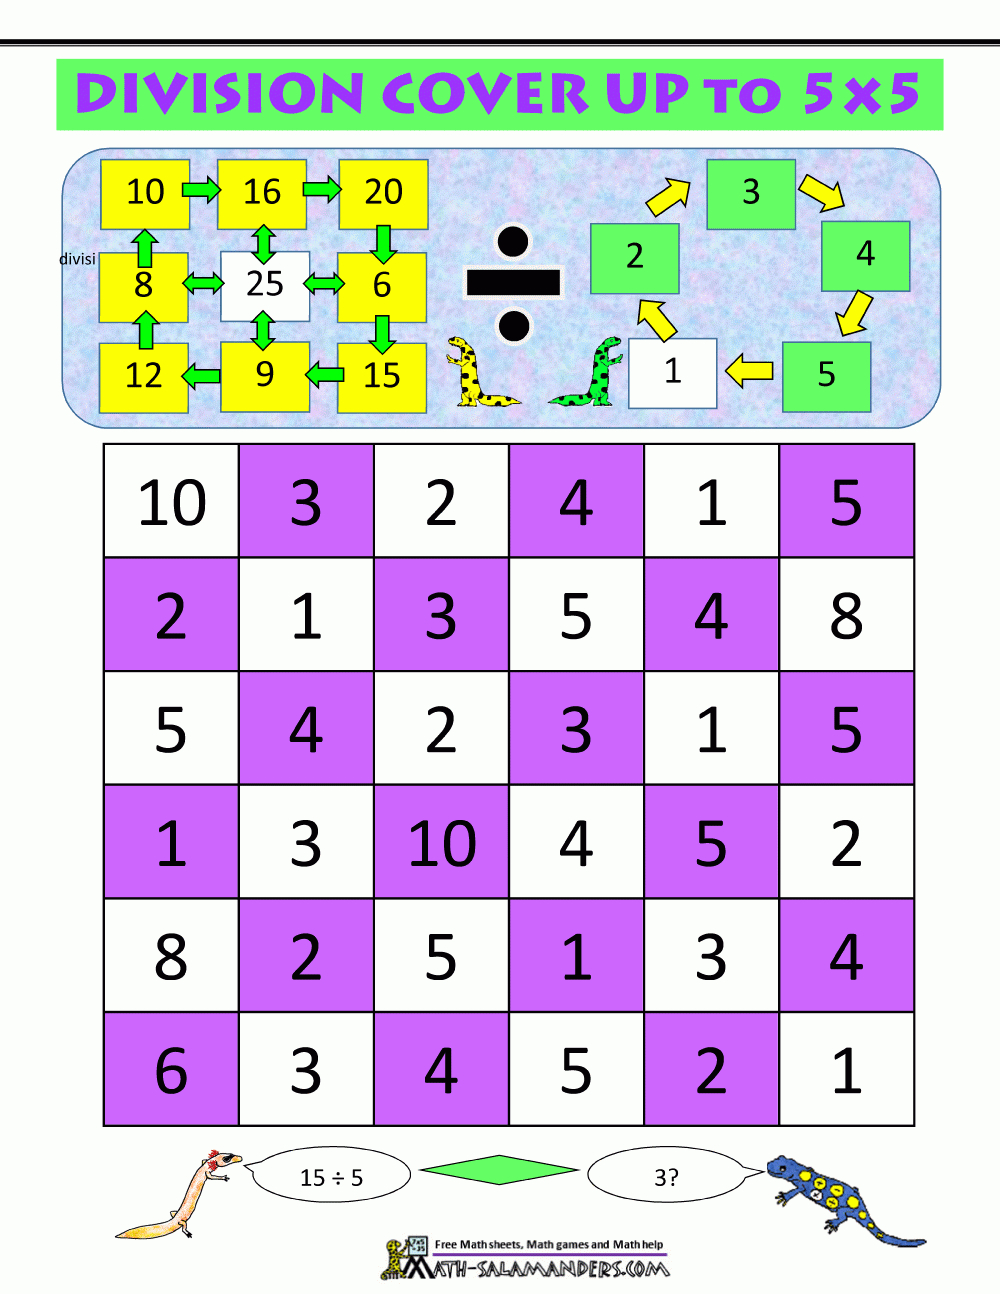 printable-multiplication-games-ks2-printablemultiplication